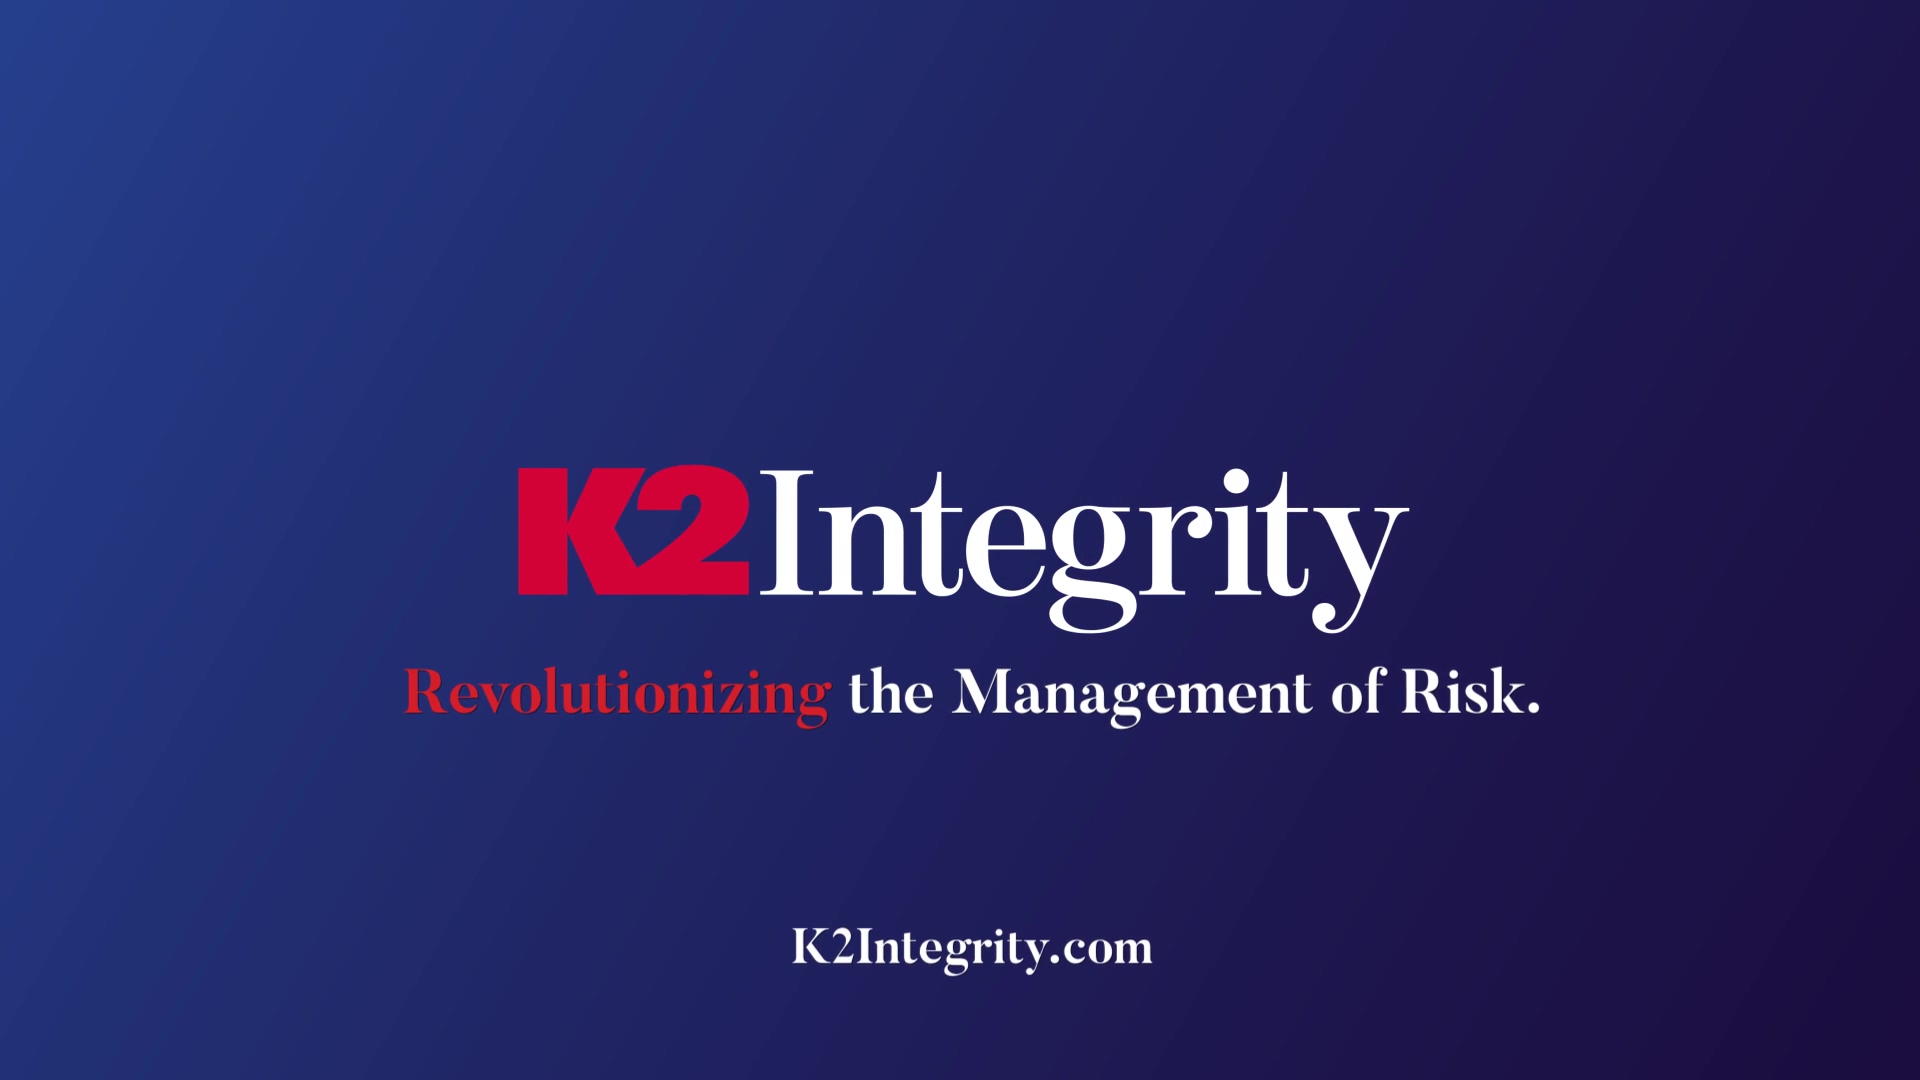 K2 Integrity_Brand Announcement Video